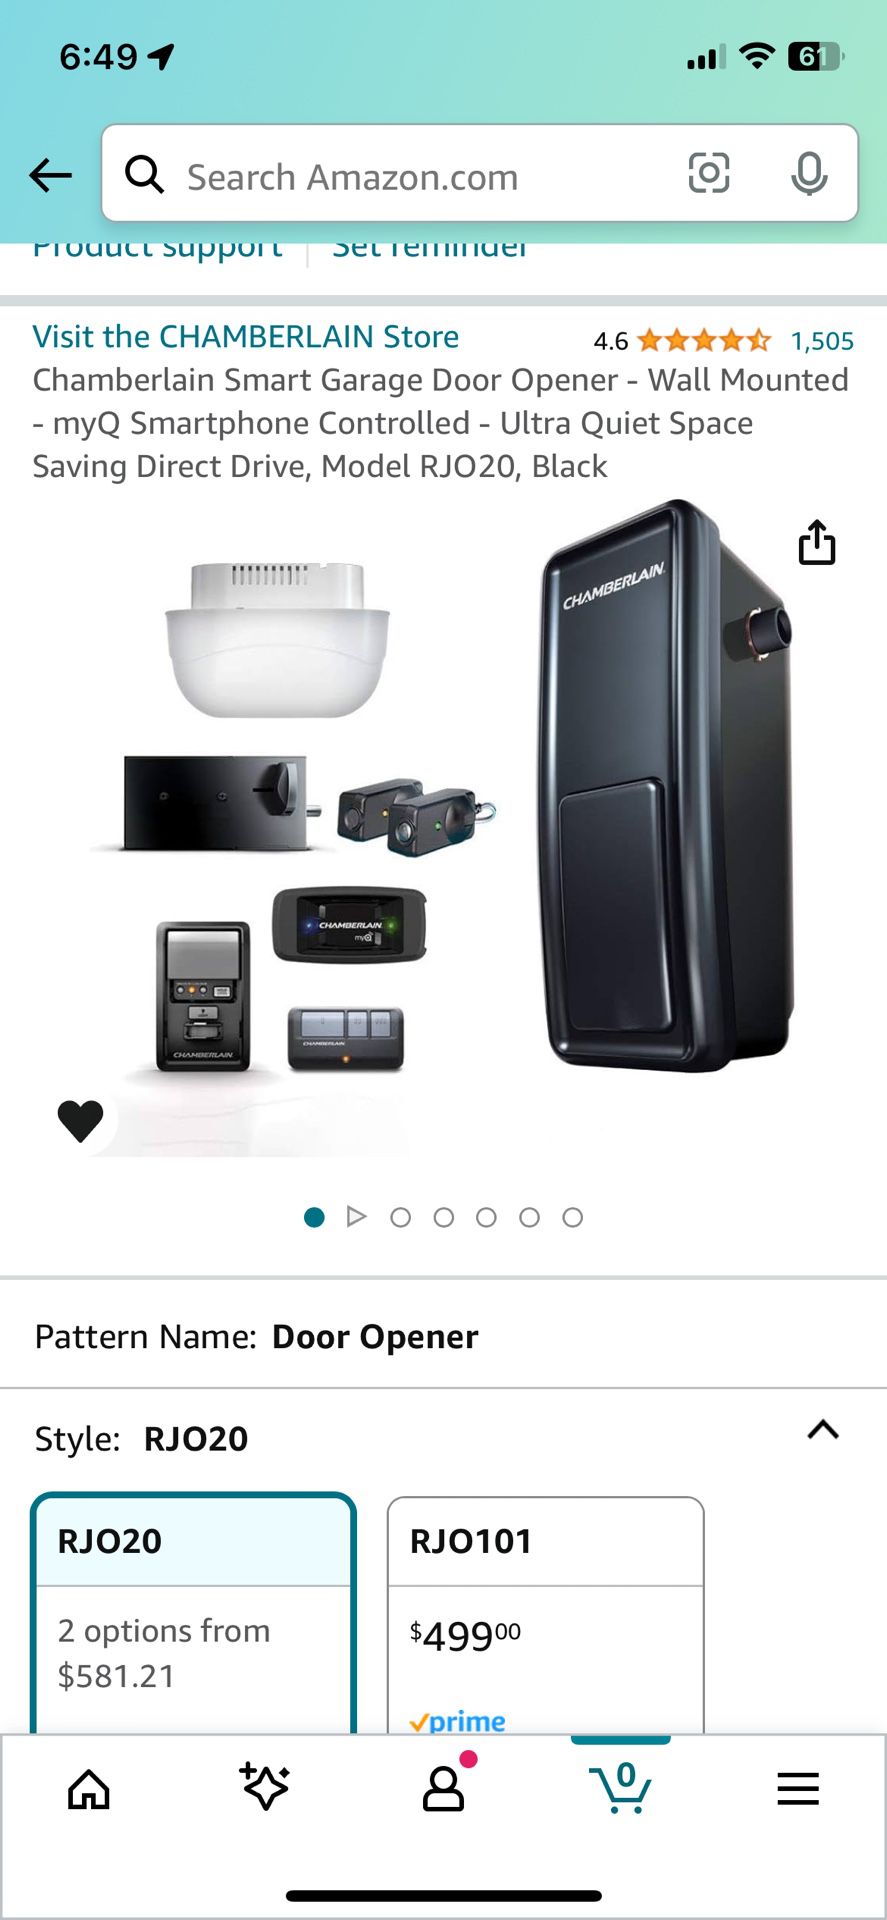 Chamberlain Smart Garage Door Opener - Wall Mounted - myQ Smartphone Controlled - Ultra Quiet Space Saving Direct Drive, Model RJO20, Black